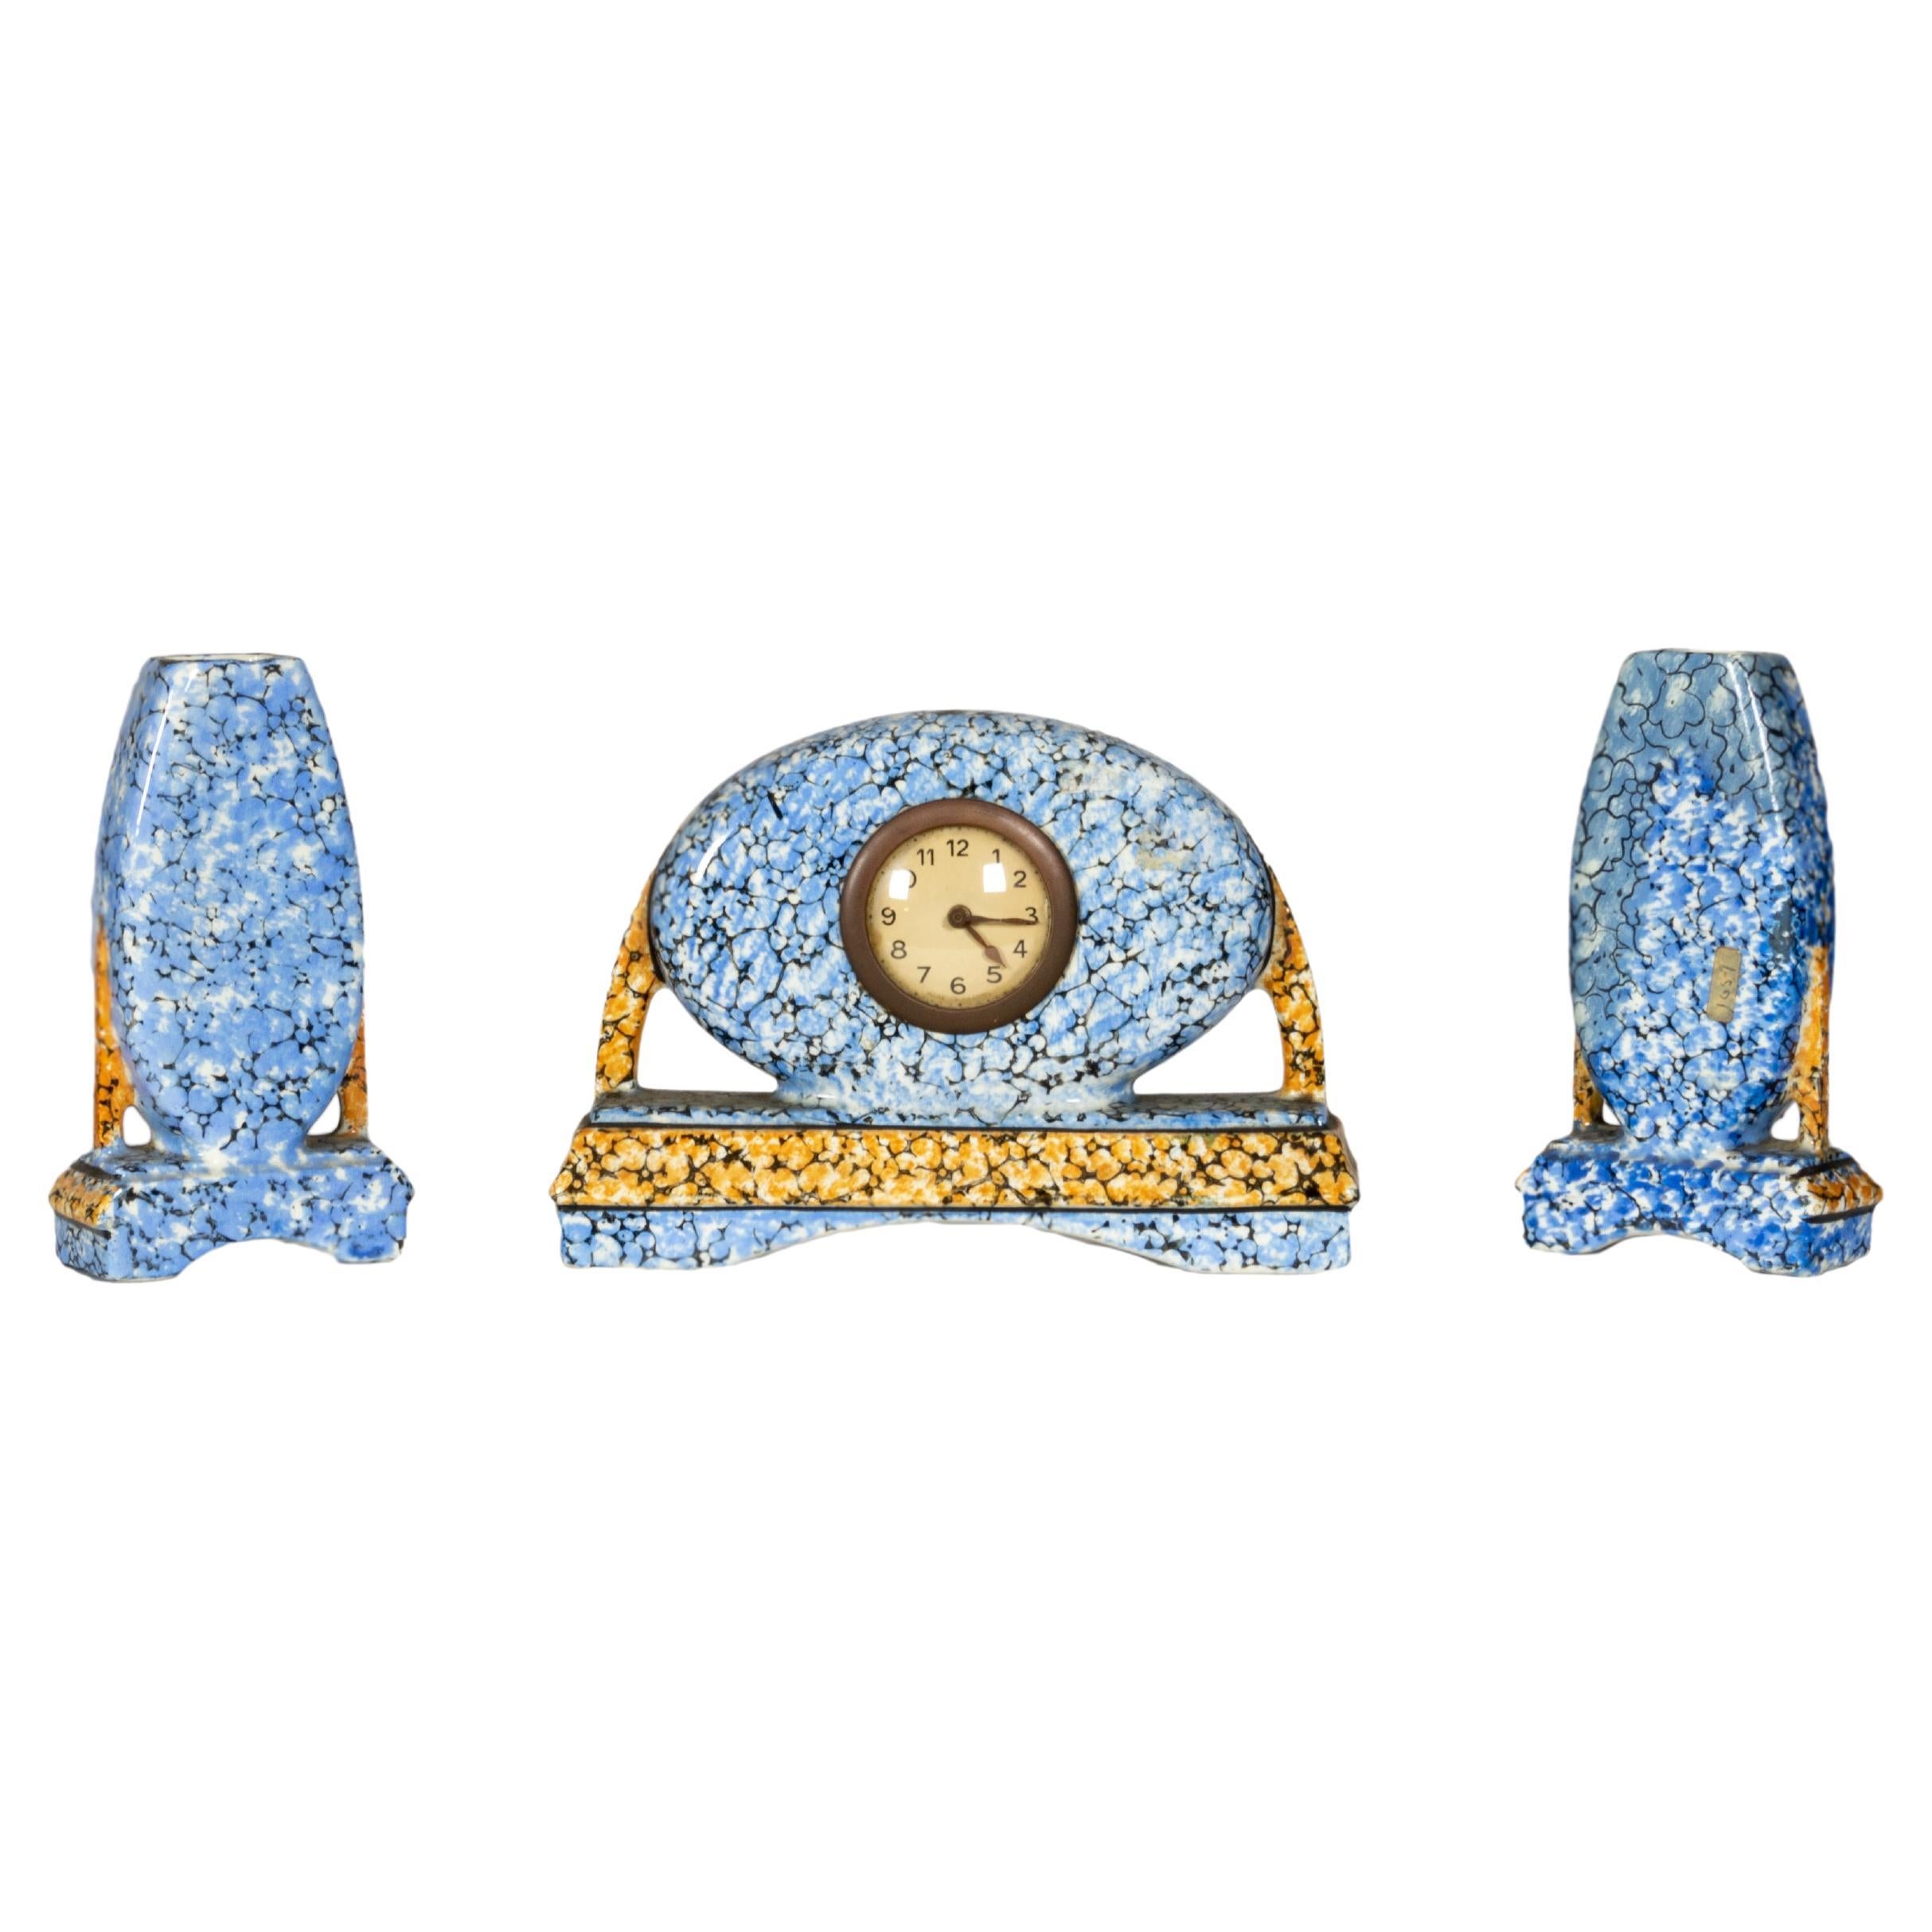 Art Deco Mantle Clock Set by Majolique Wasmuel For Sale